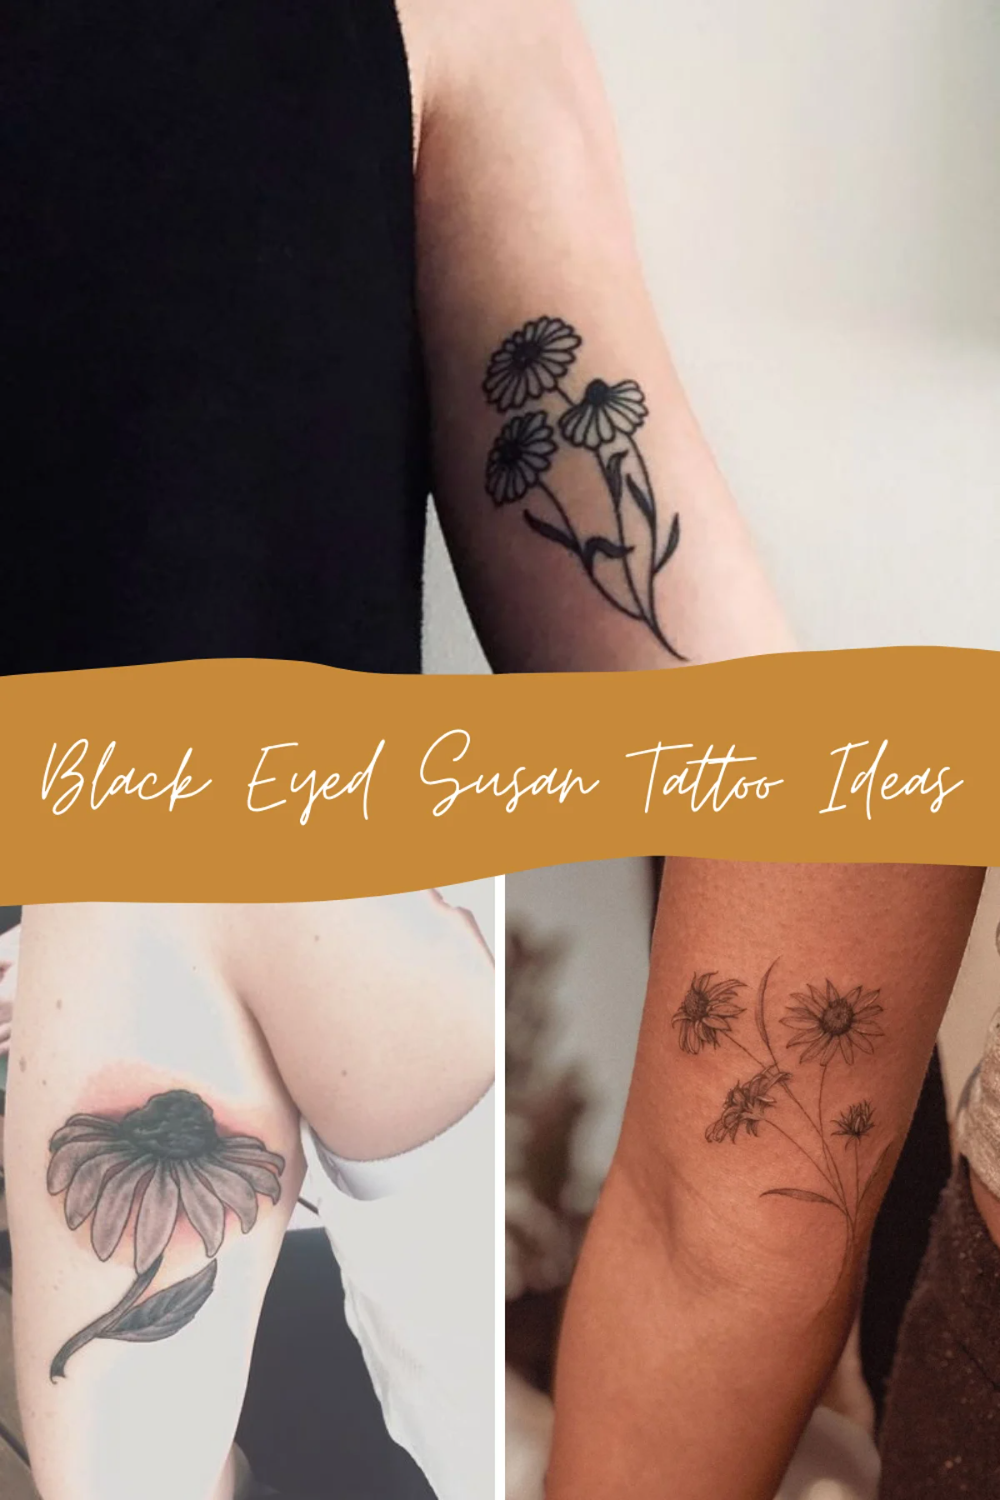 ami mimi recommends Black Eyed Susan Tattoo